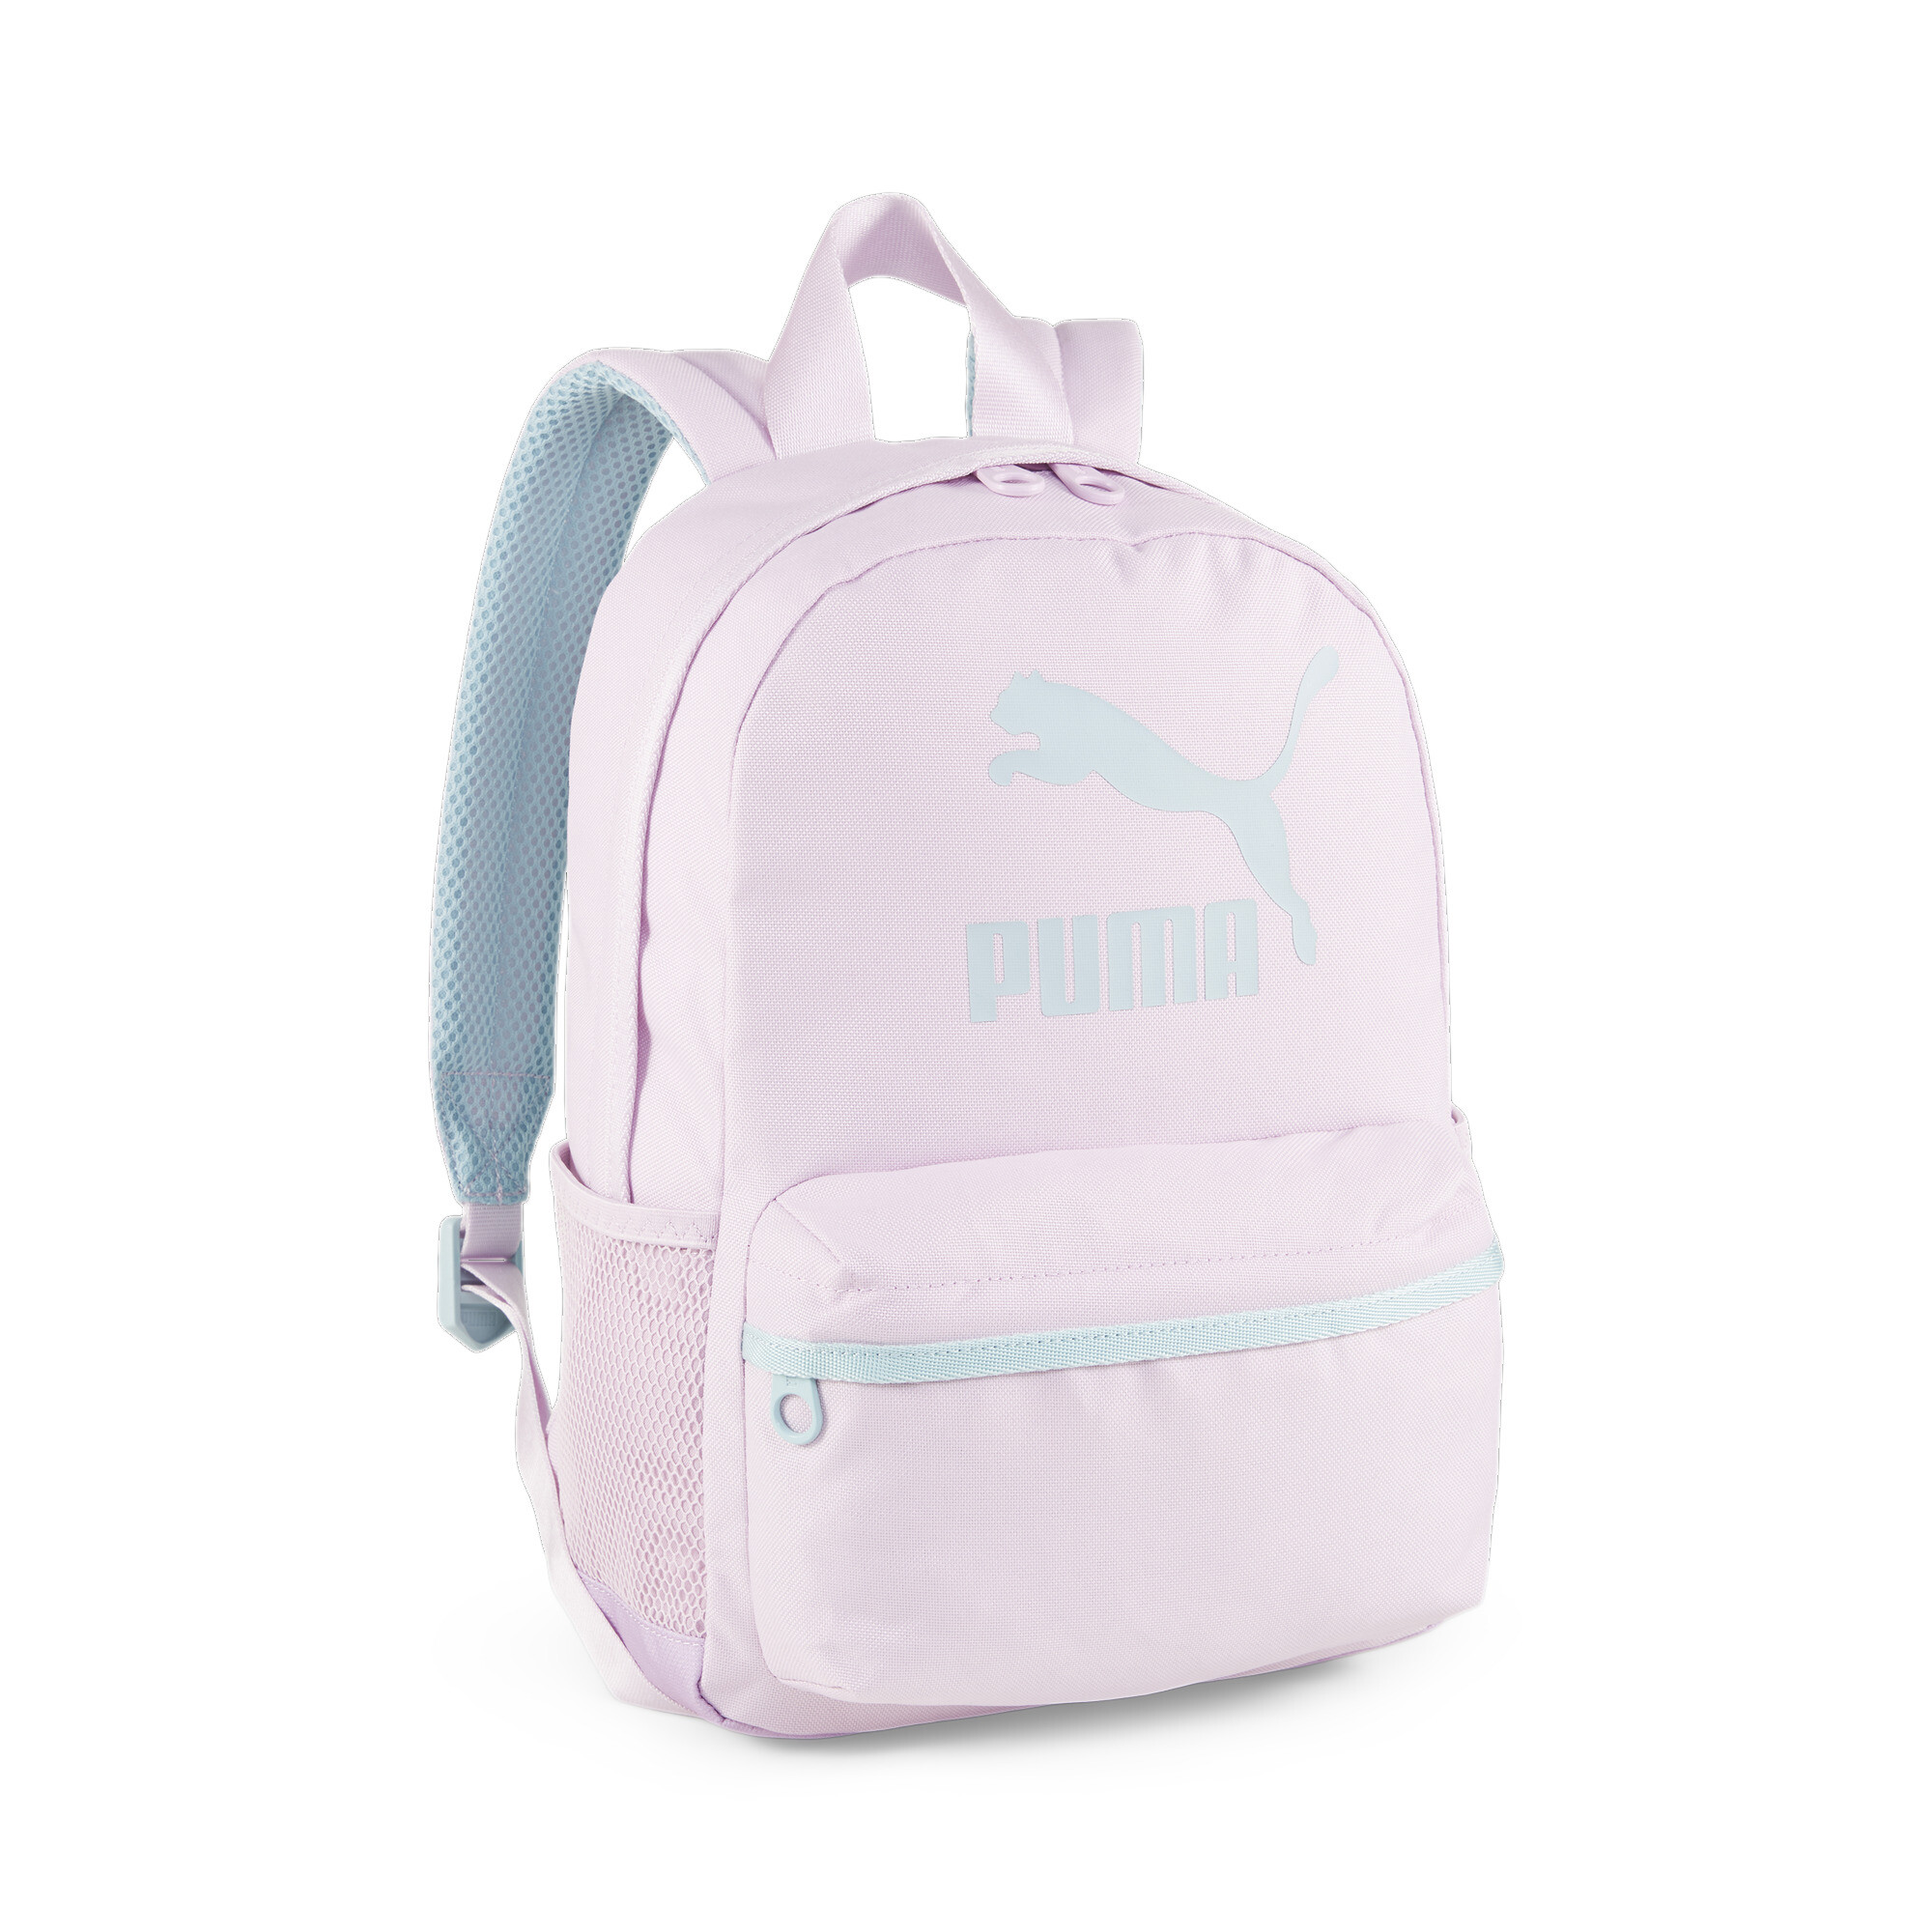 Puma Classics Archive Small Backpack, Purple, Accessories